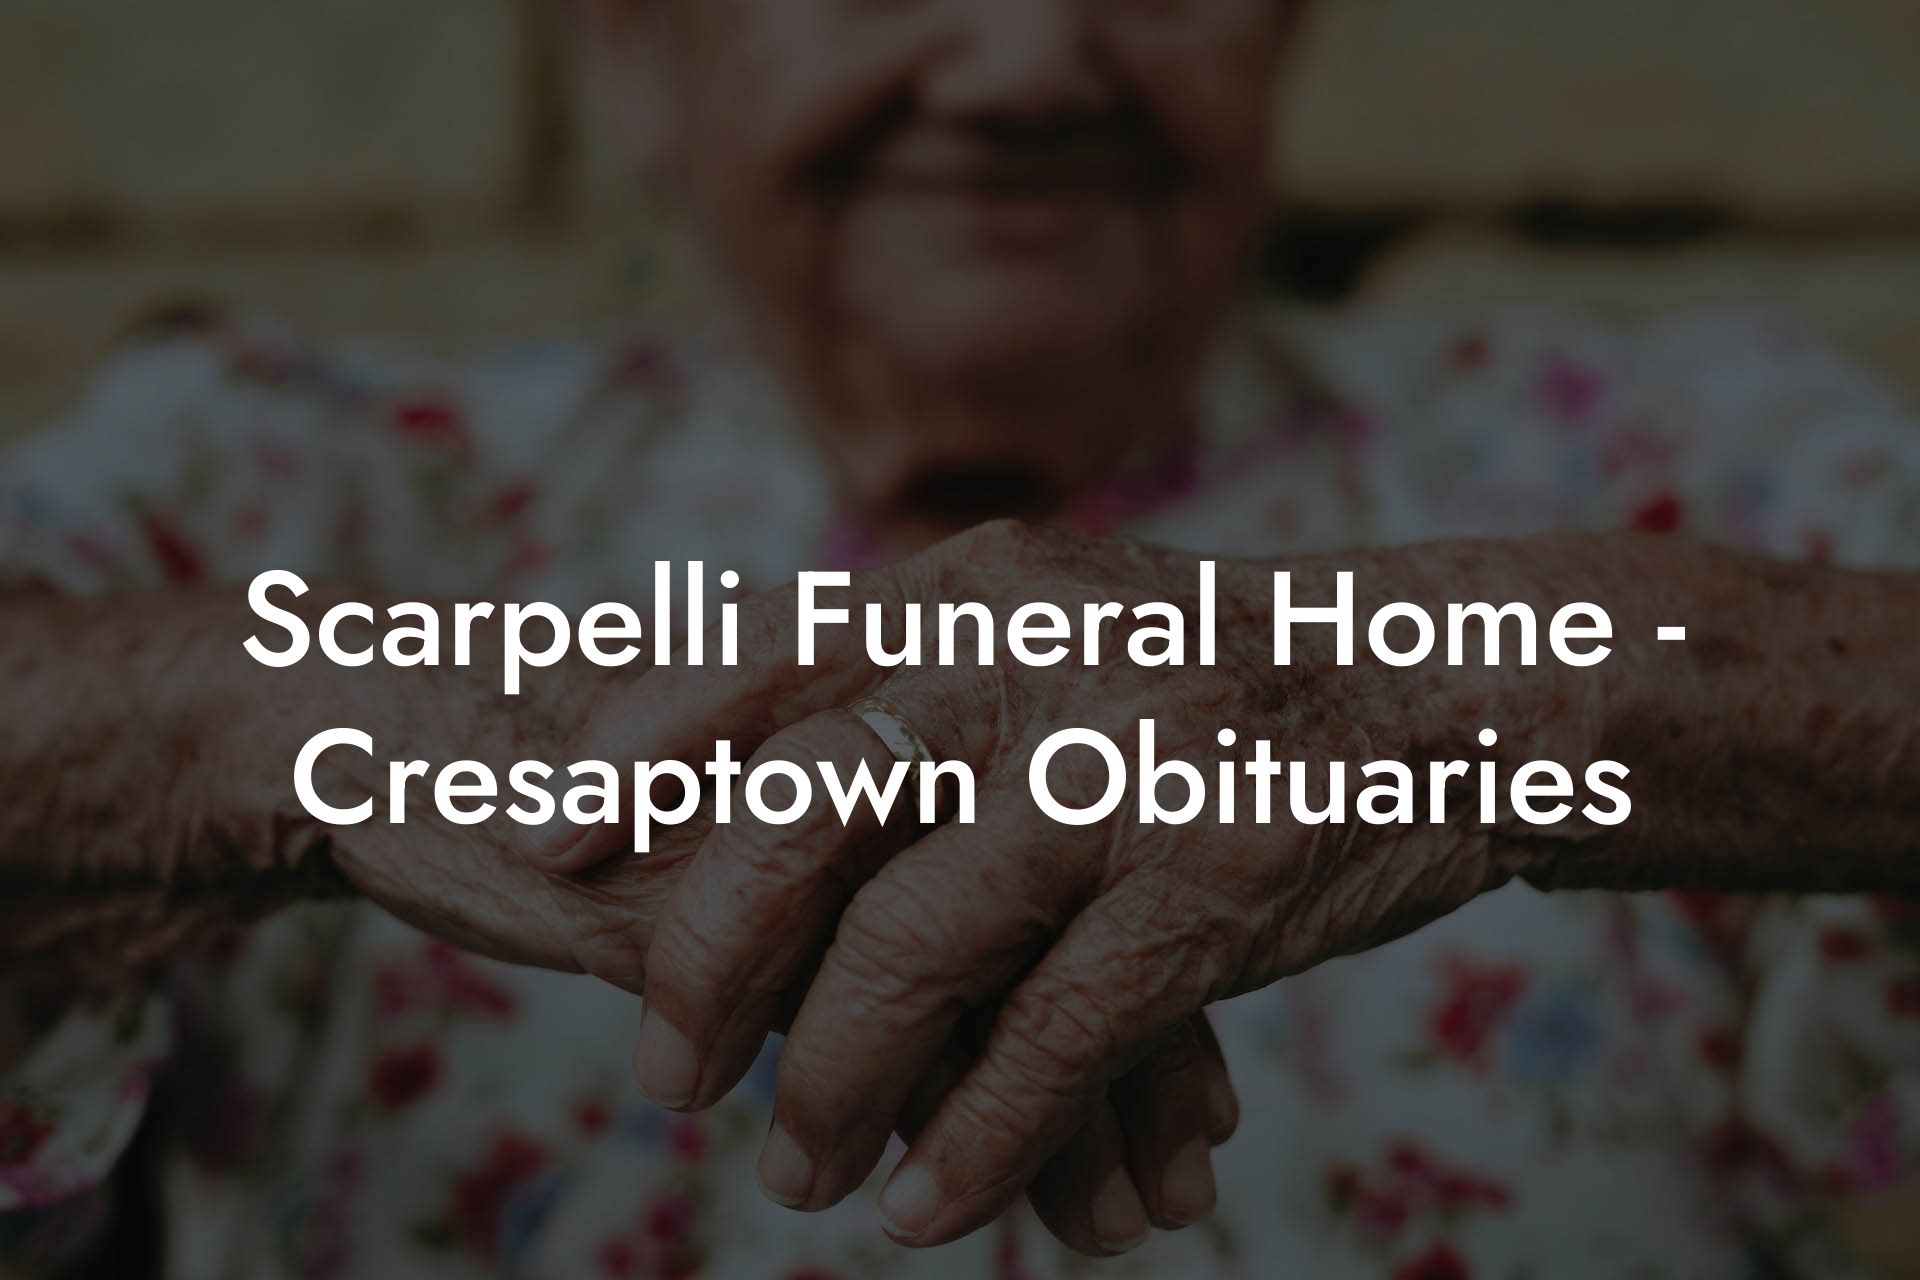 Scarpelli Funeral Home - Cresaptown Obituaries